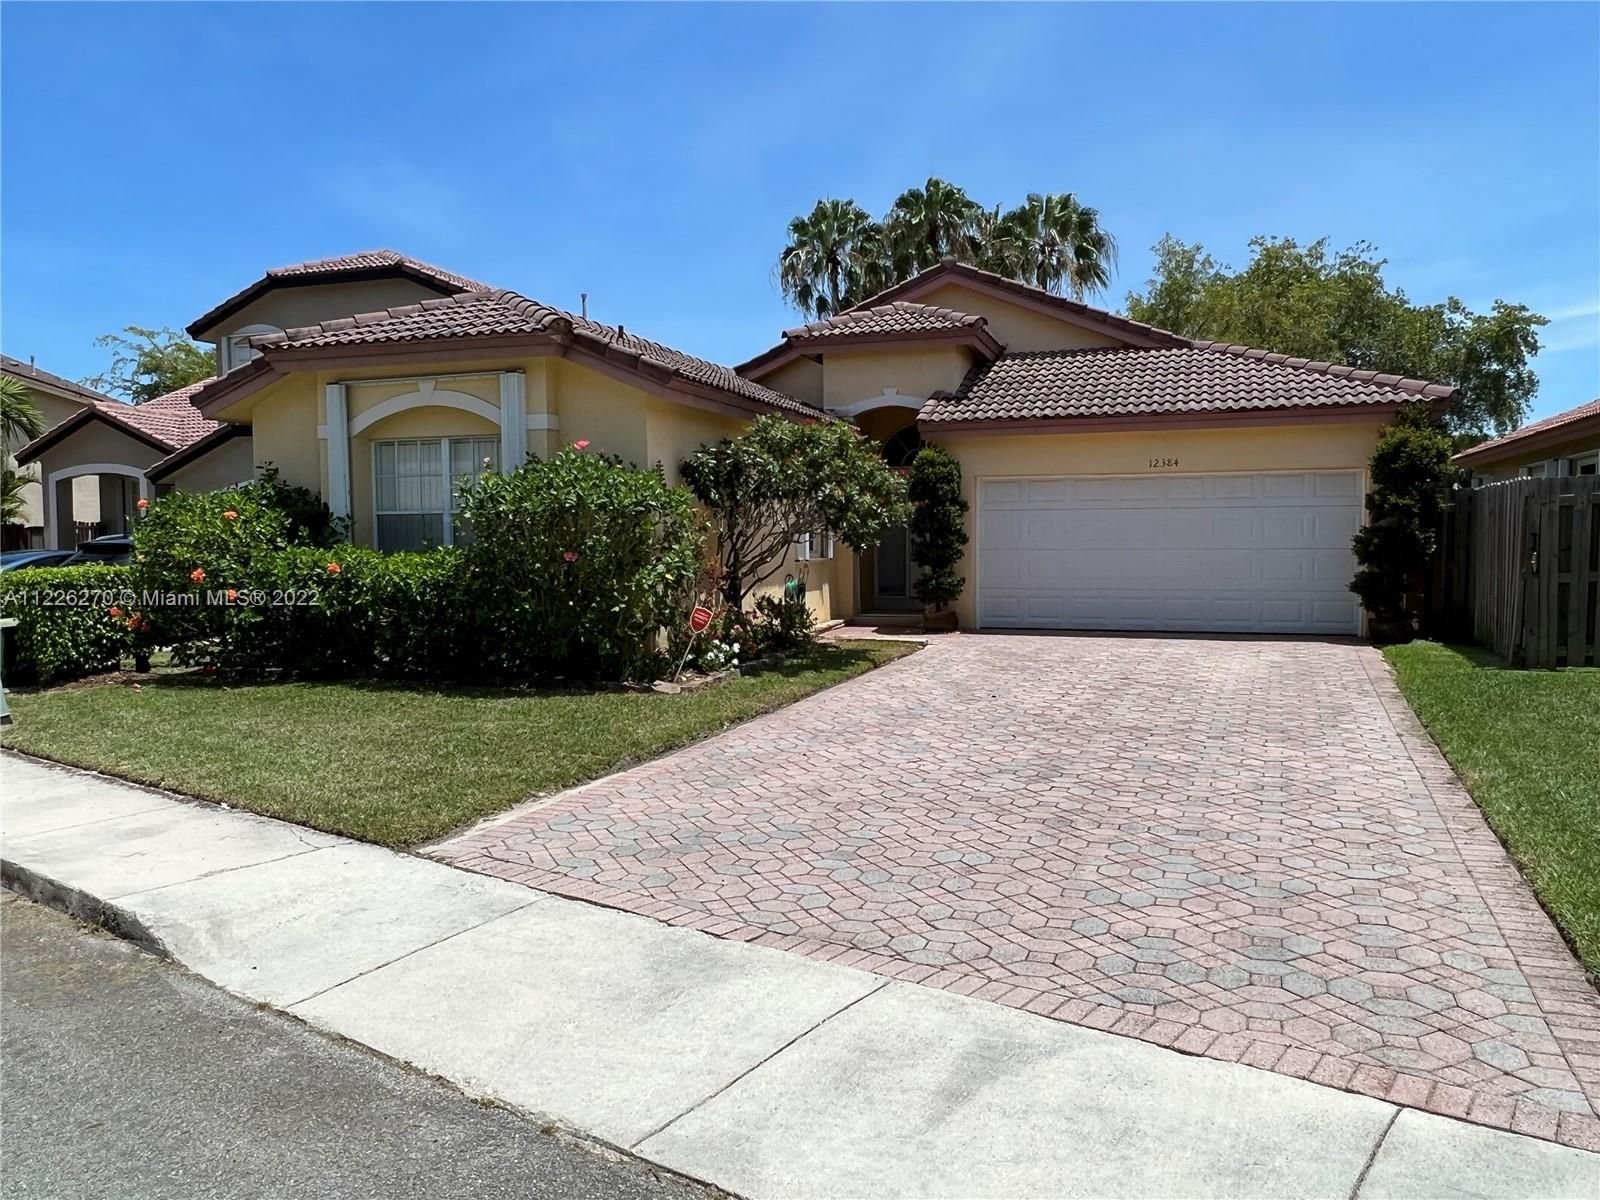 Real estate property located at 12384 143rd Ln, Miami-Dade County, Miami, FL